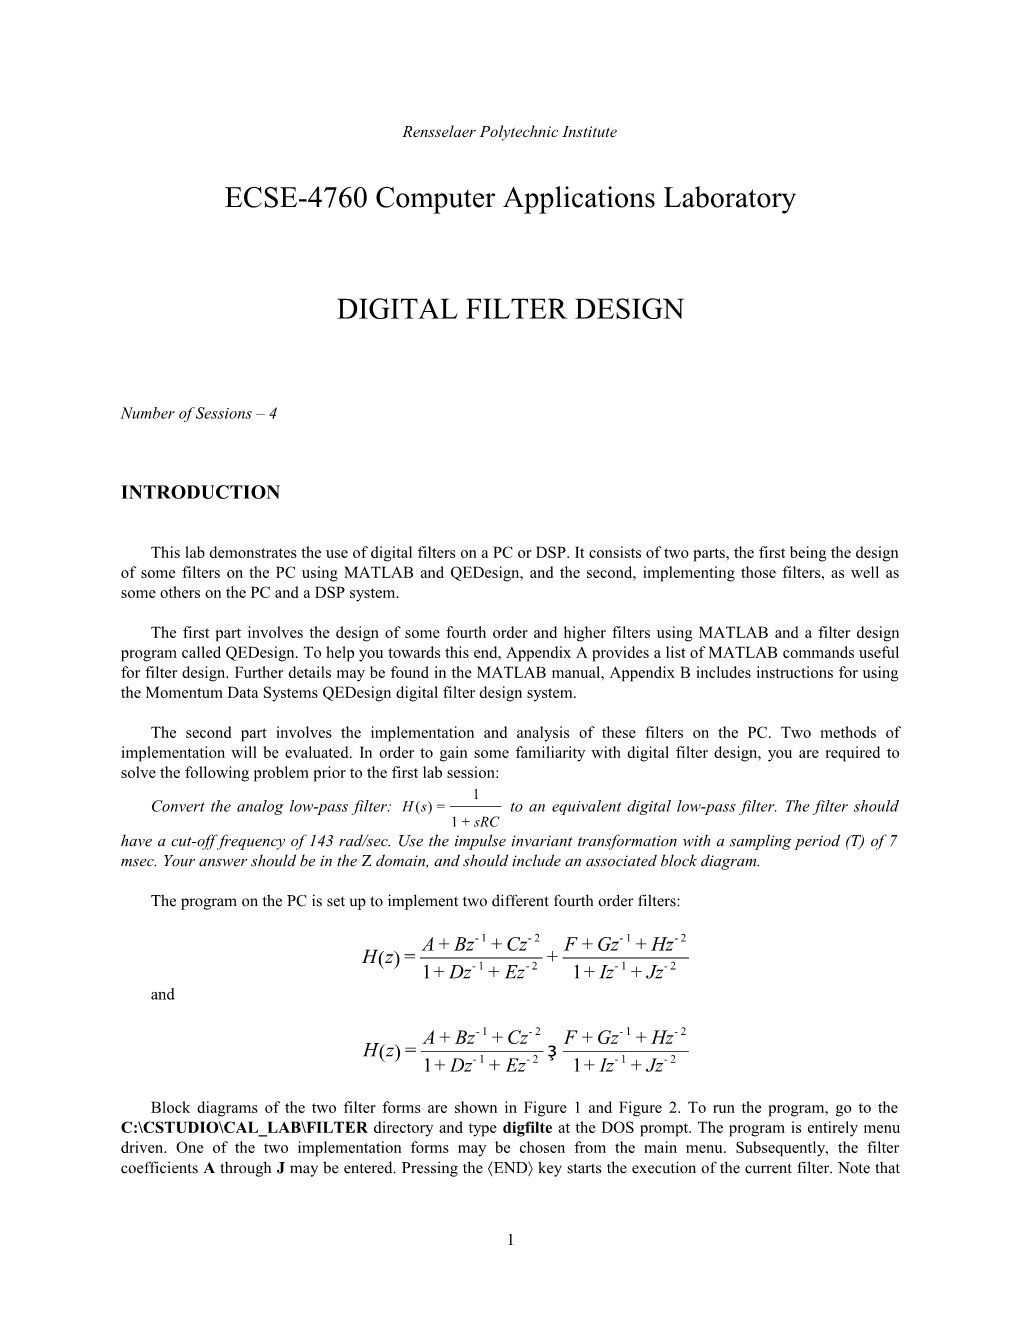 ECSE-4760 Computer Applications Laboratory